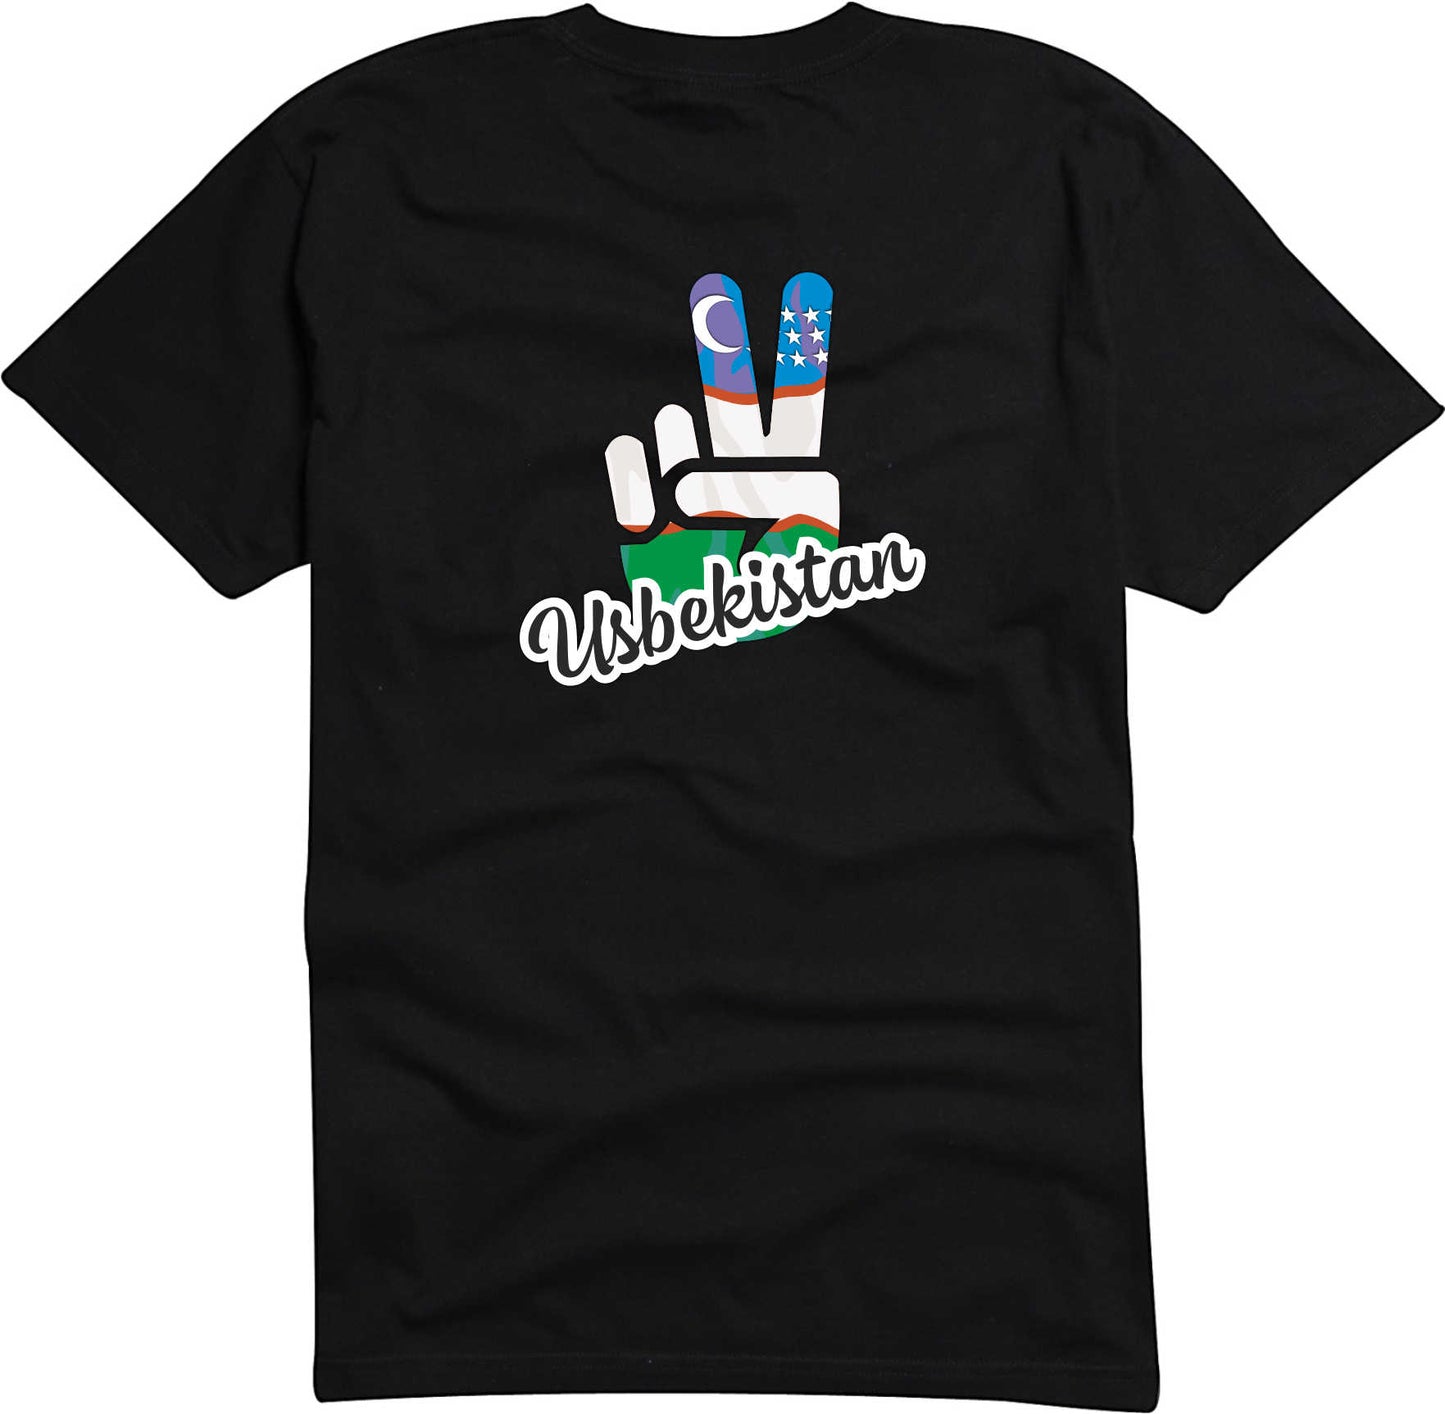 T-Shirt Herren - Victory - Flagge / Fahne - Usbekistan - Sieg